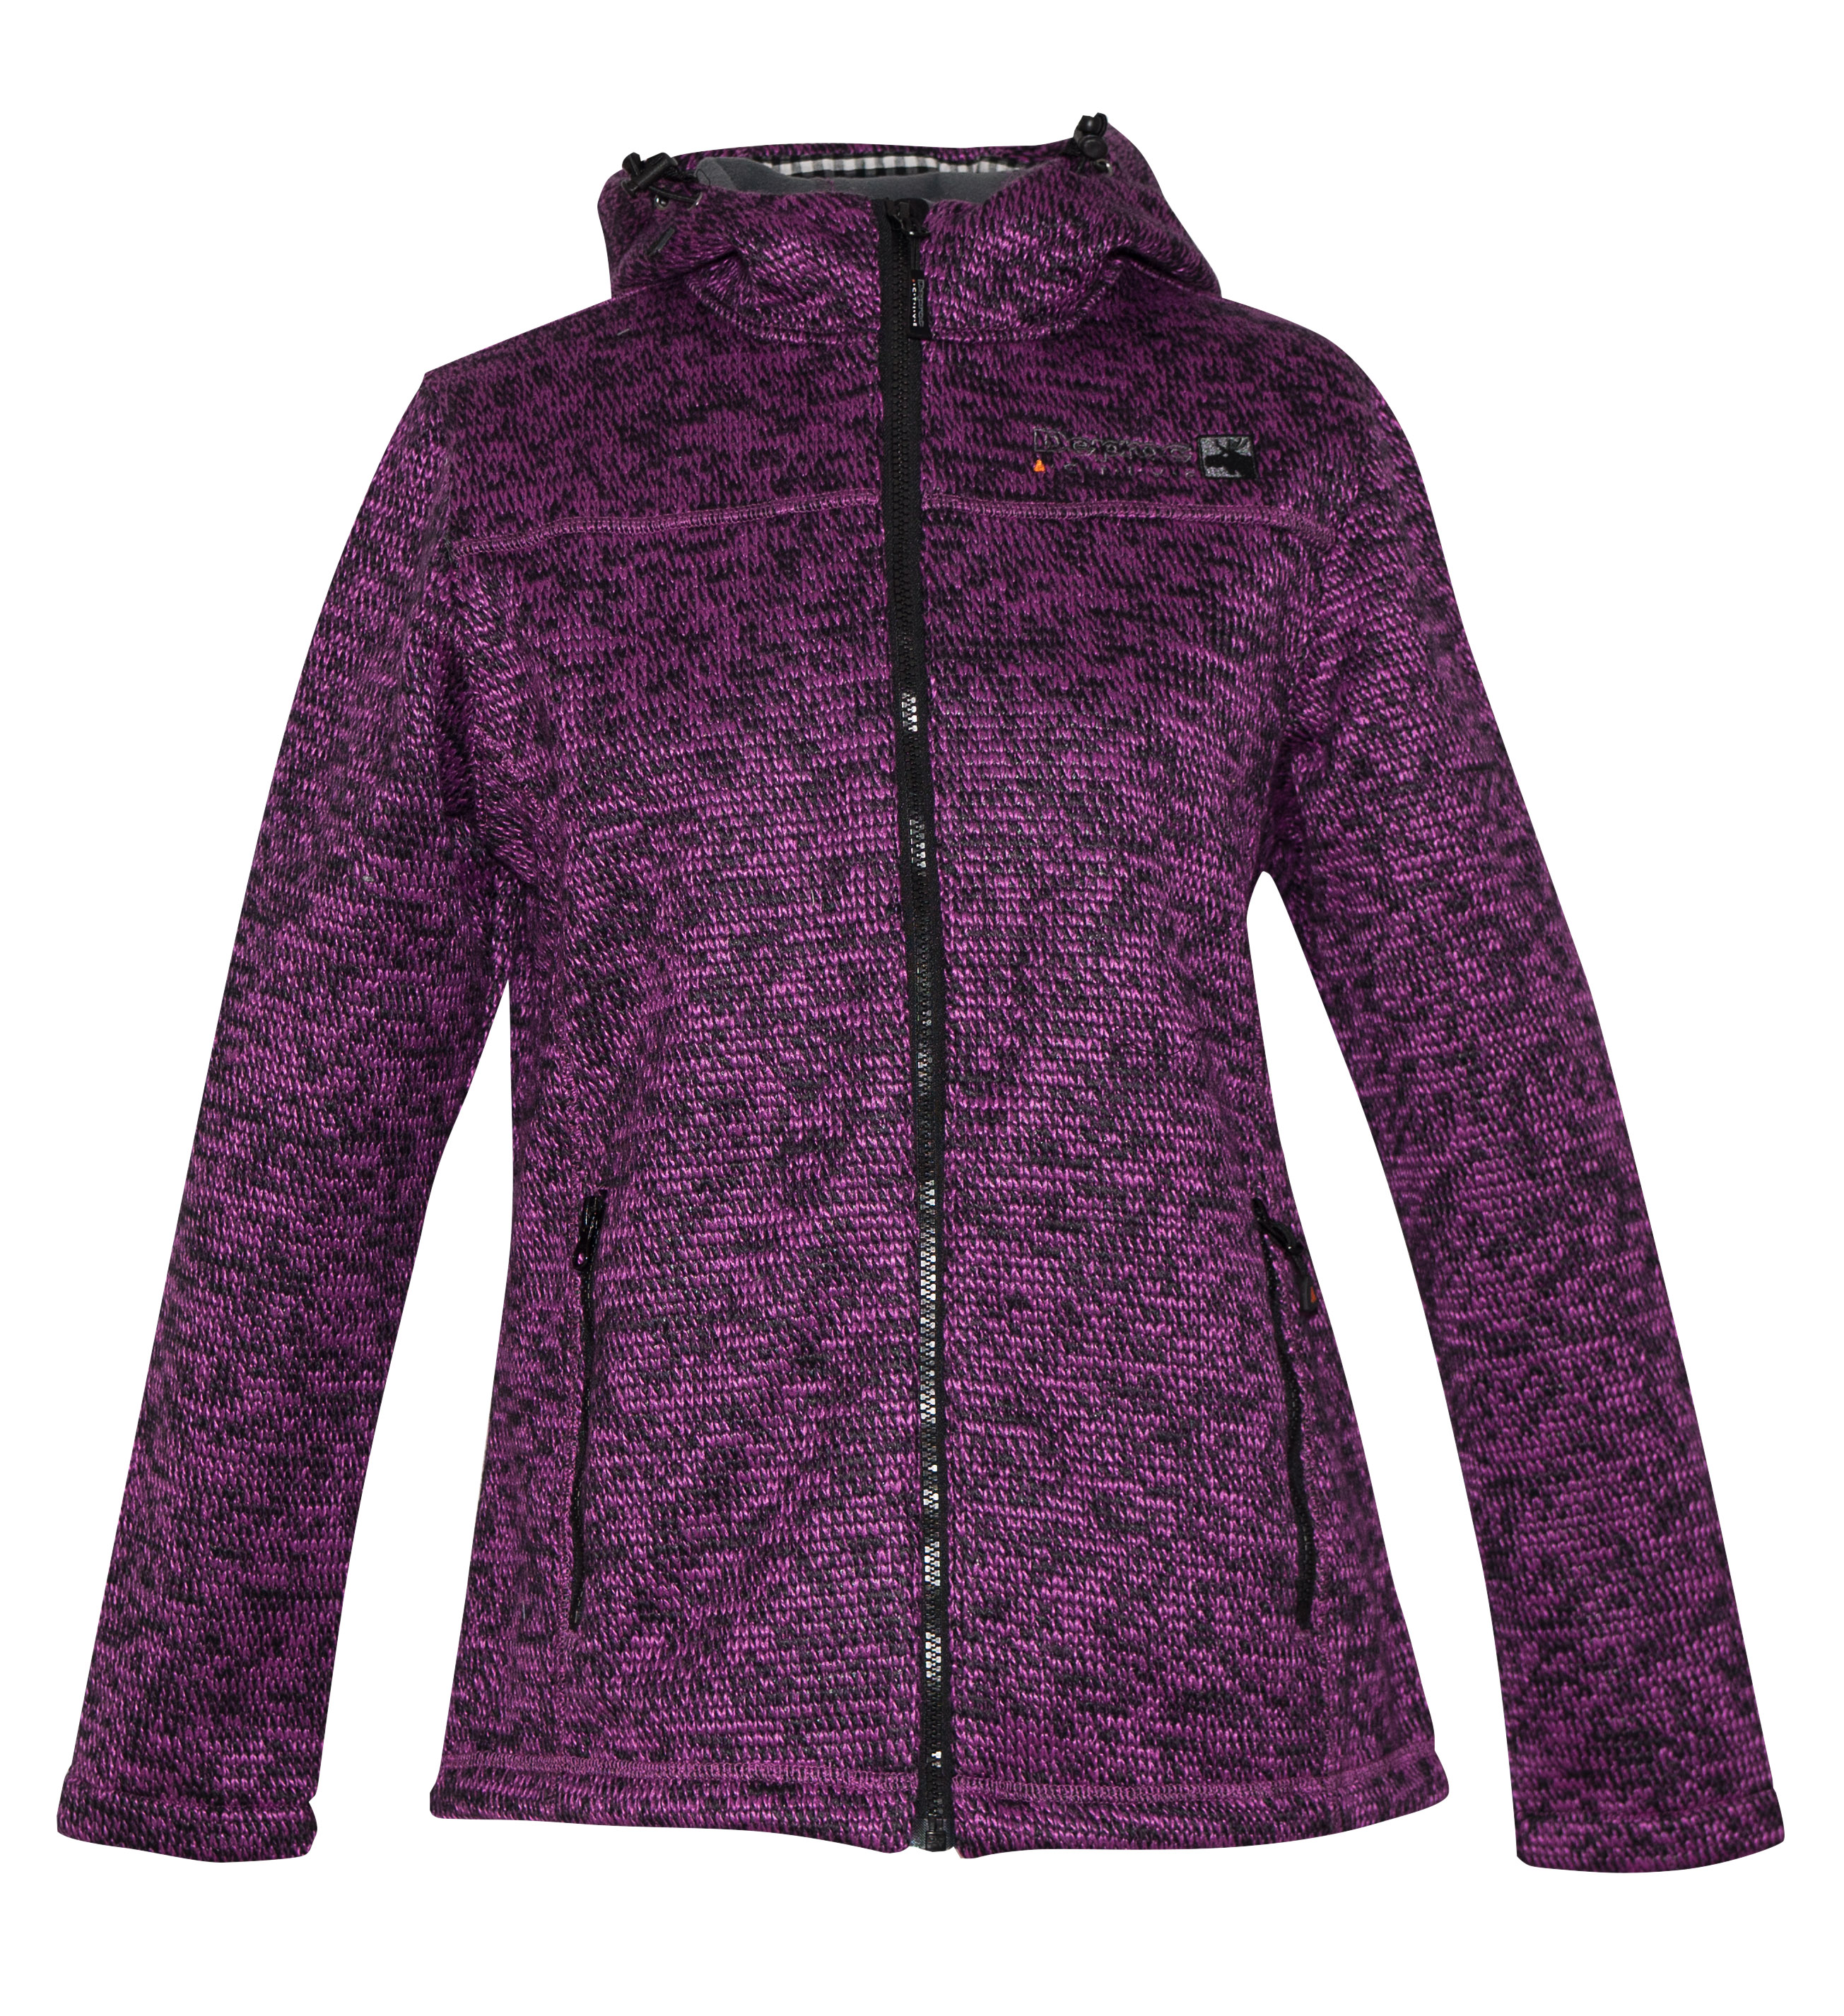 Strickfleece Sweater-Jacke DEPROC WHITEFORD Lady Farbe: purple Größe: 48